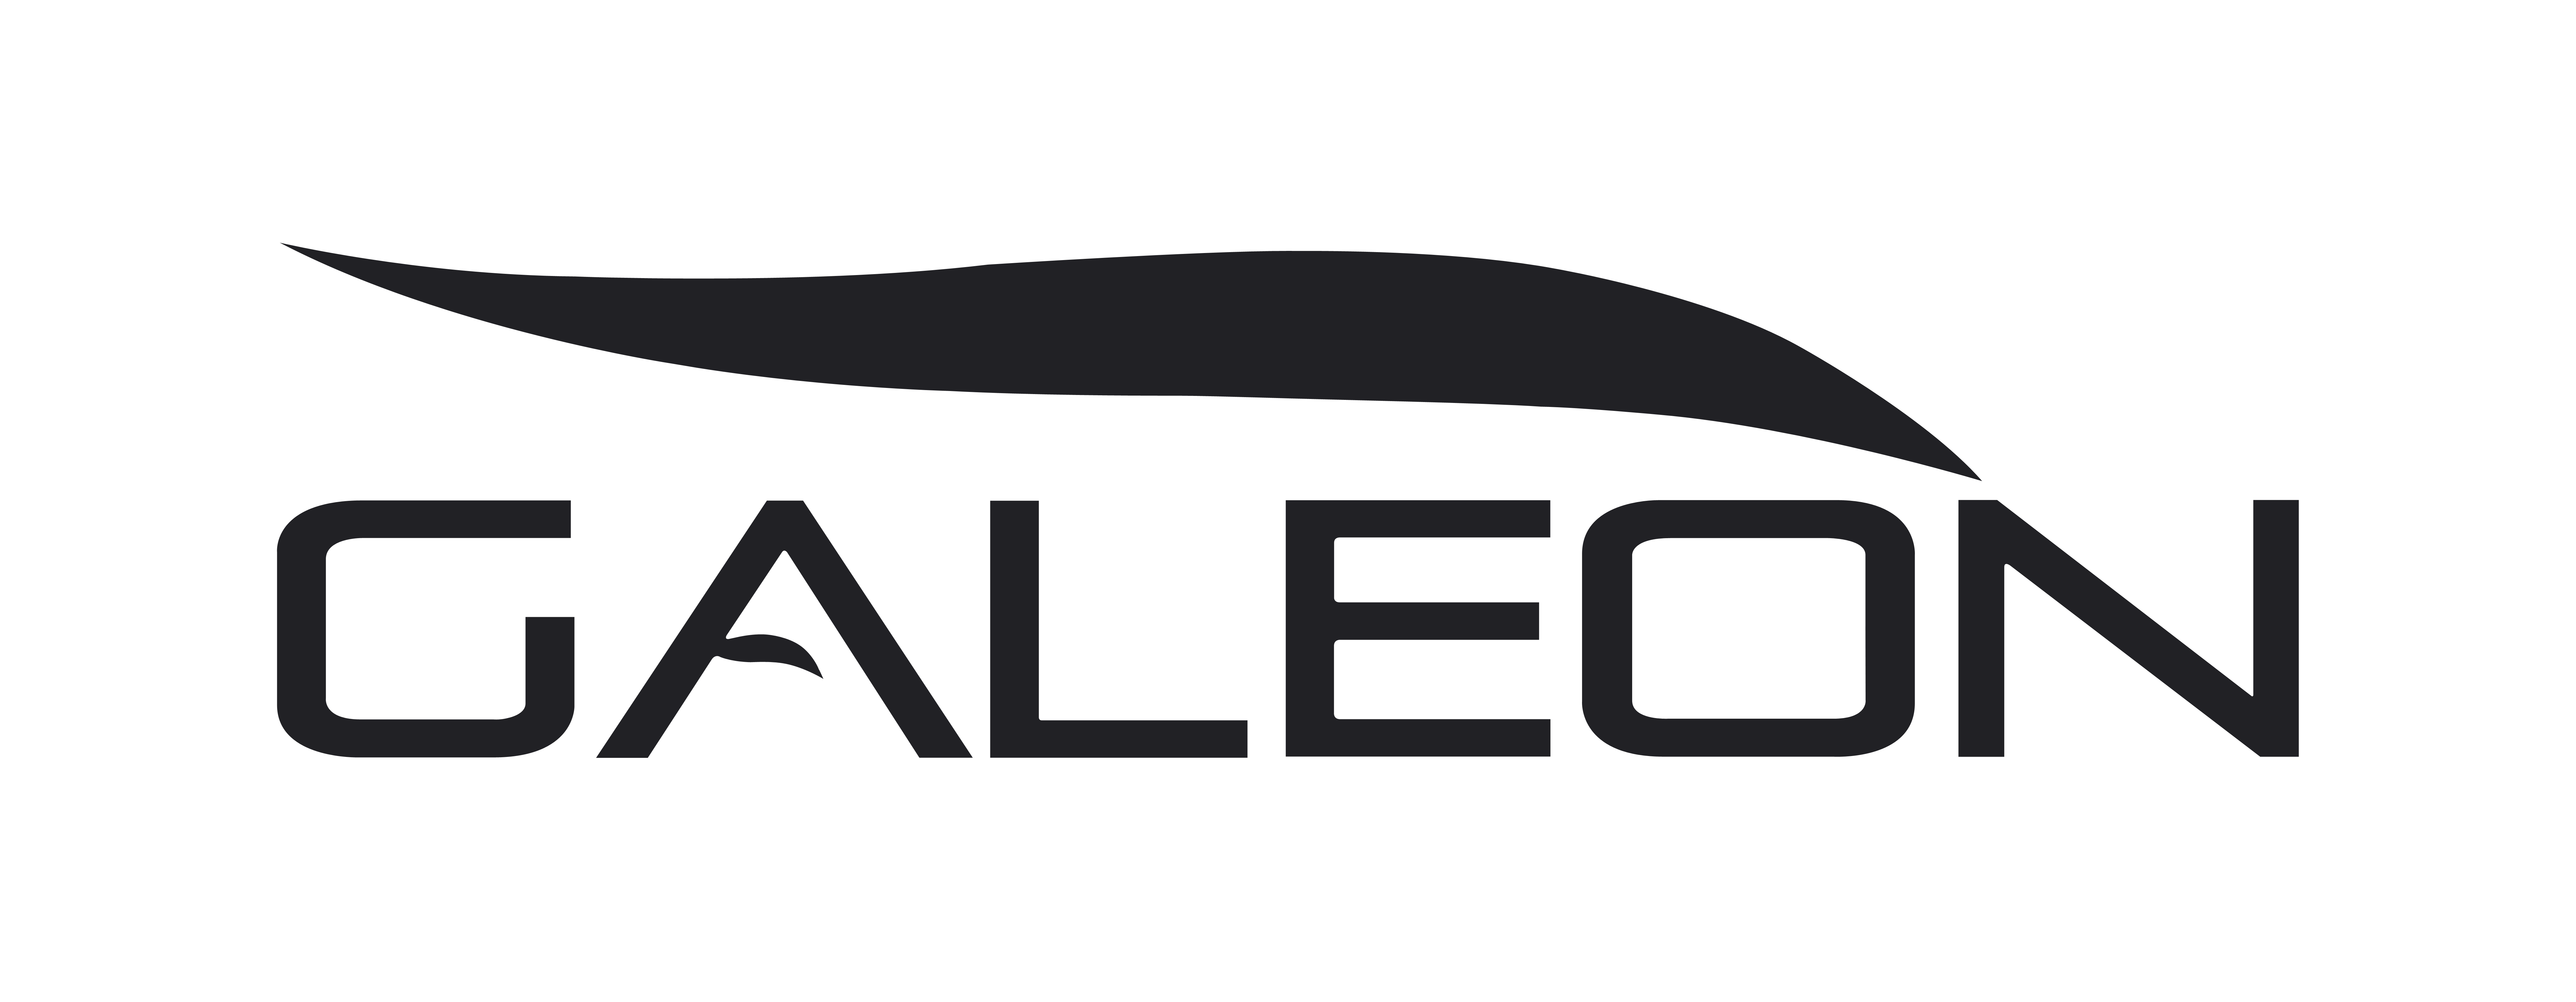 Galeon logo